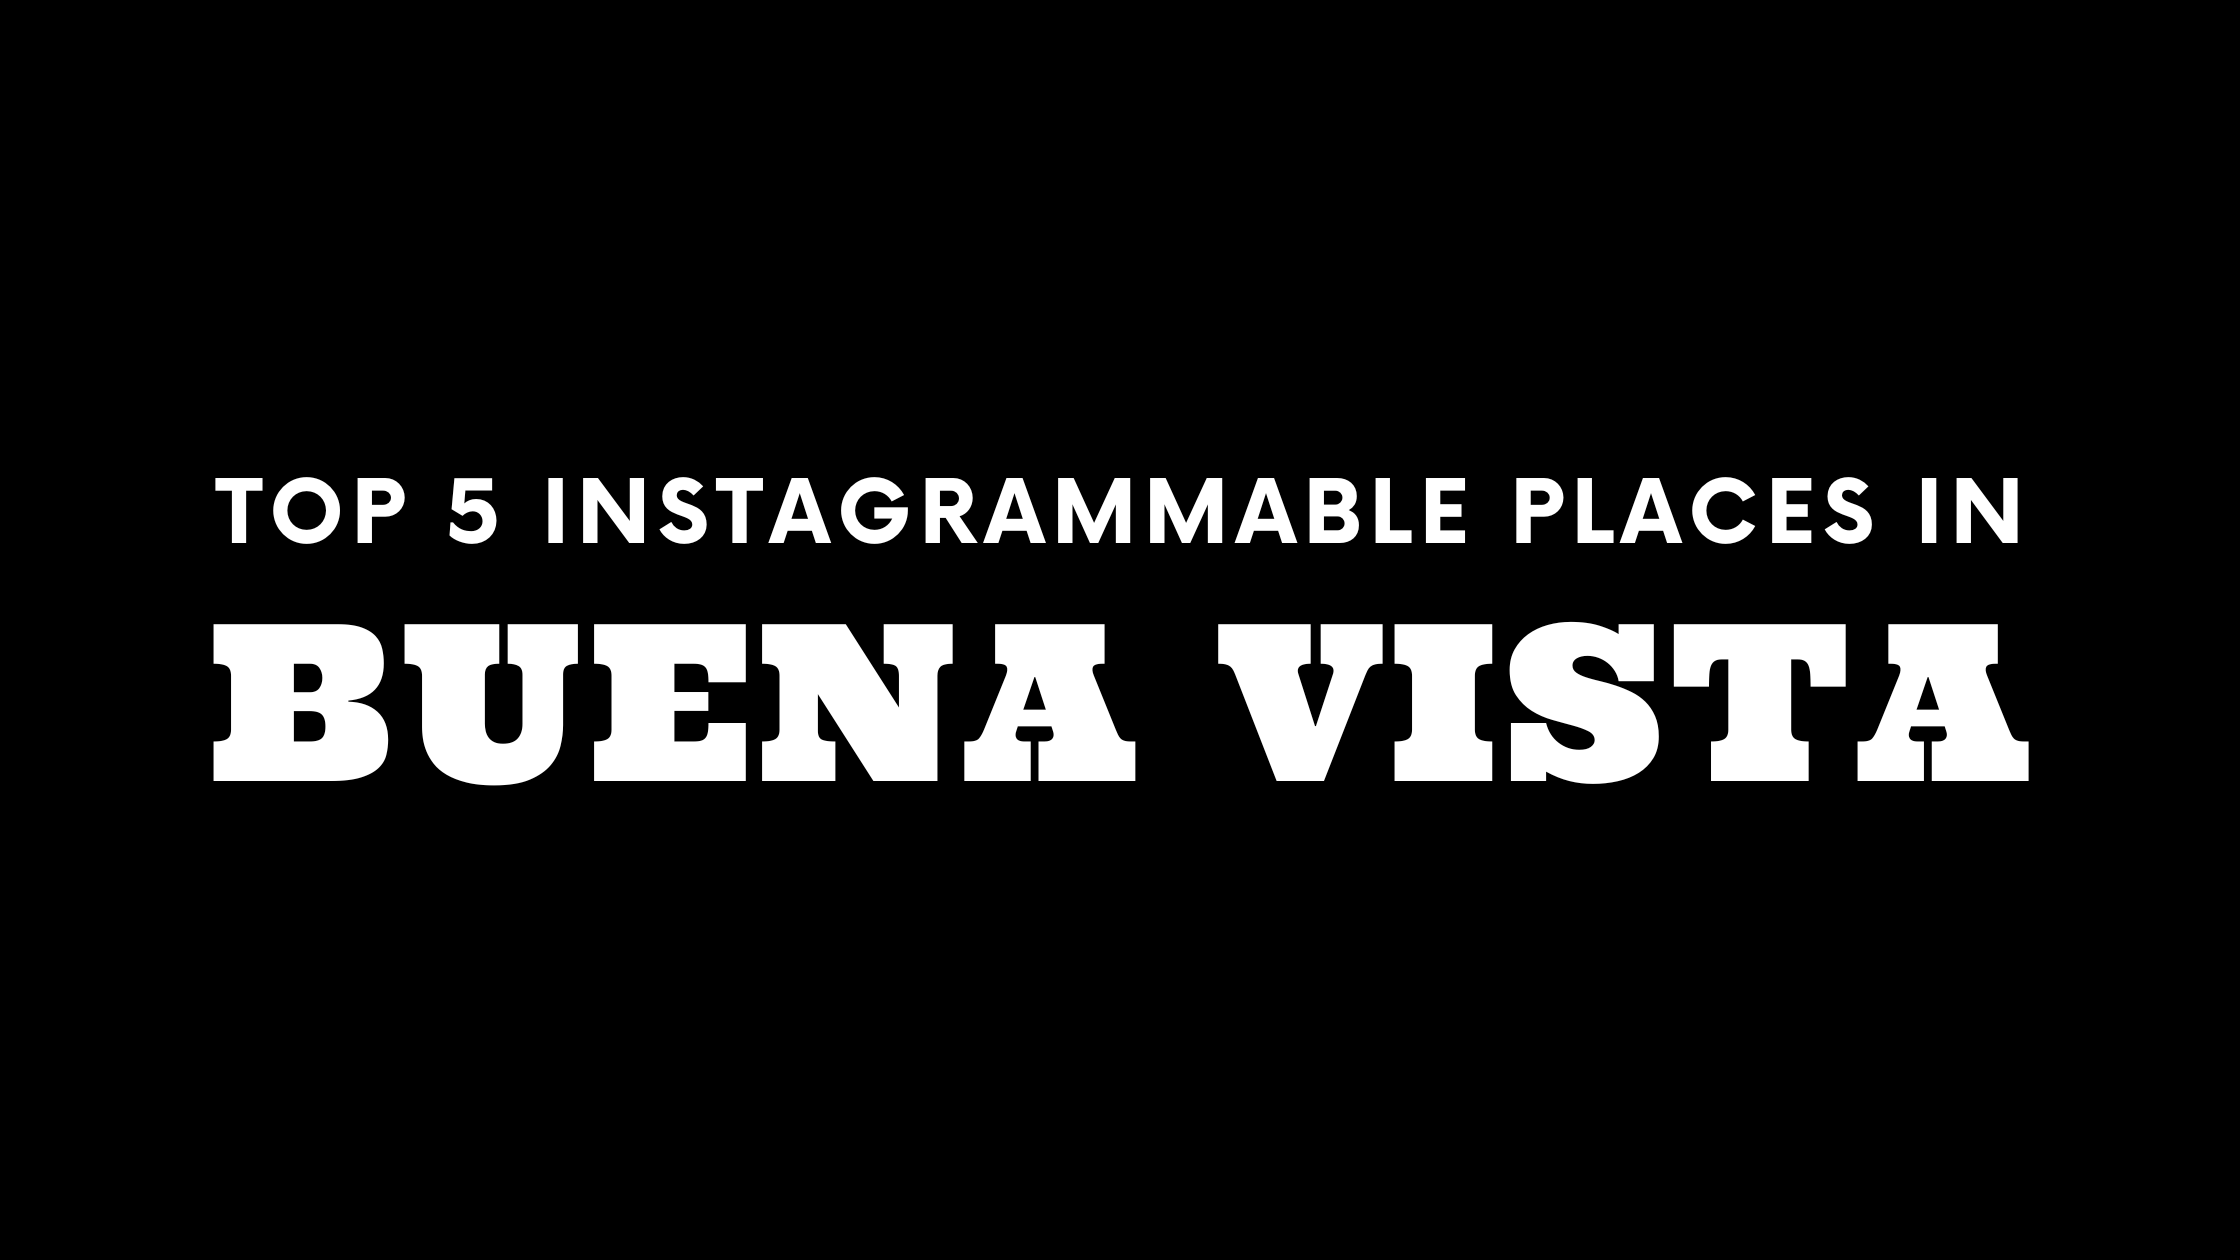 Top 5 Instagrammable Places in Buena Vista